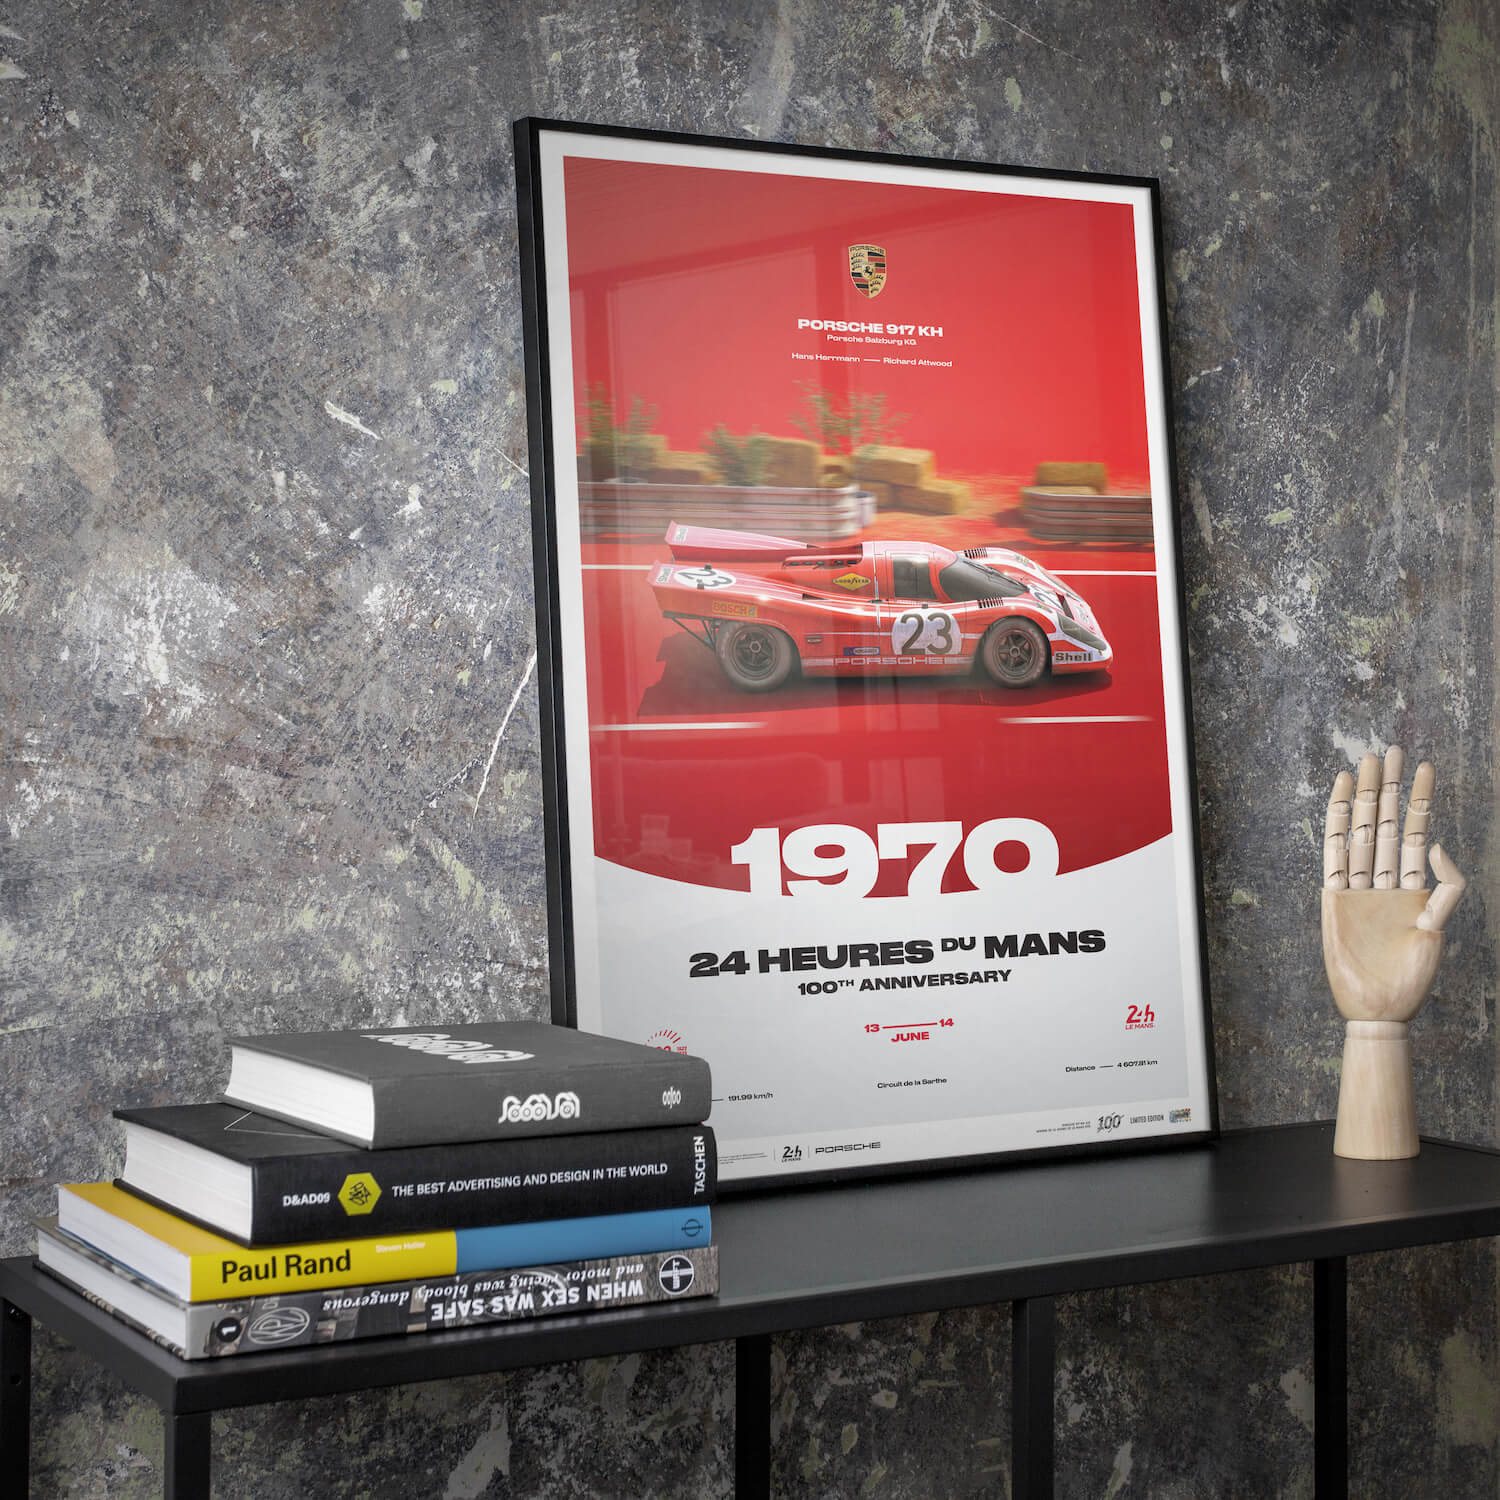 Porsche 917 KH - 24h Le Mans - 100th Anniversary - 1970